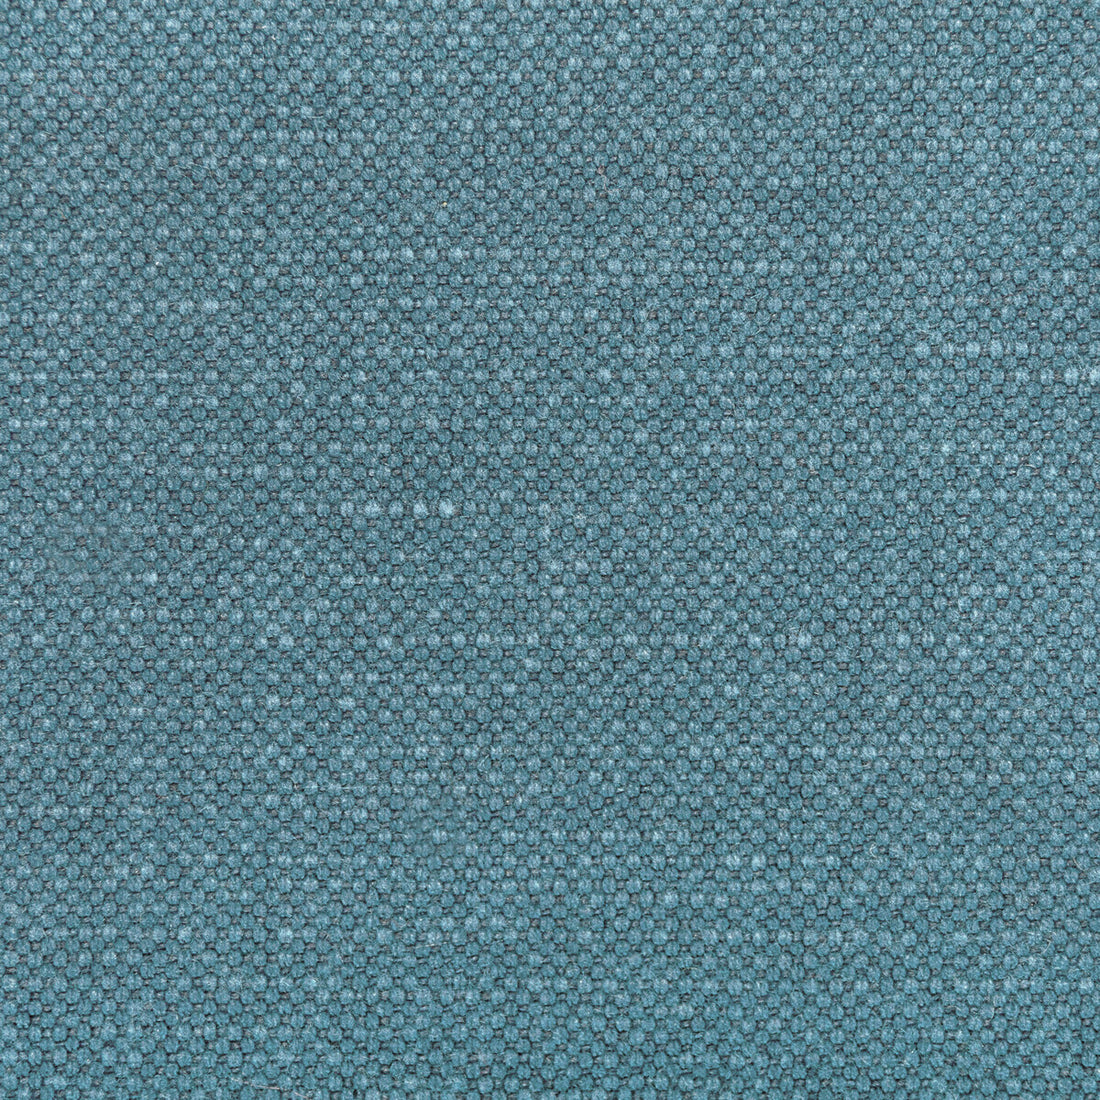 Carson fabric in mediterranean color - pattern 36282.515.0 - by Kravet Basics